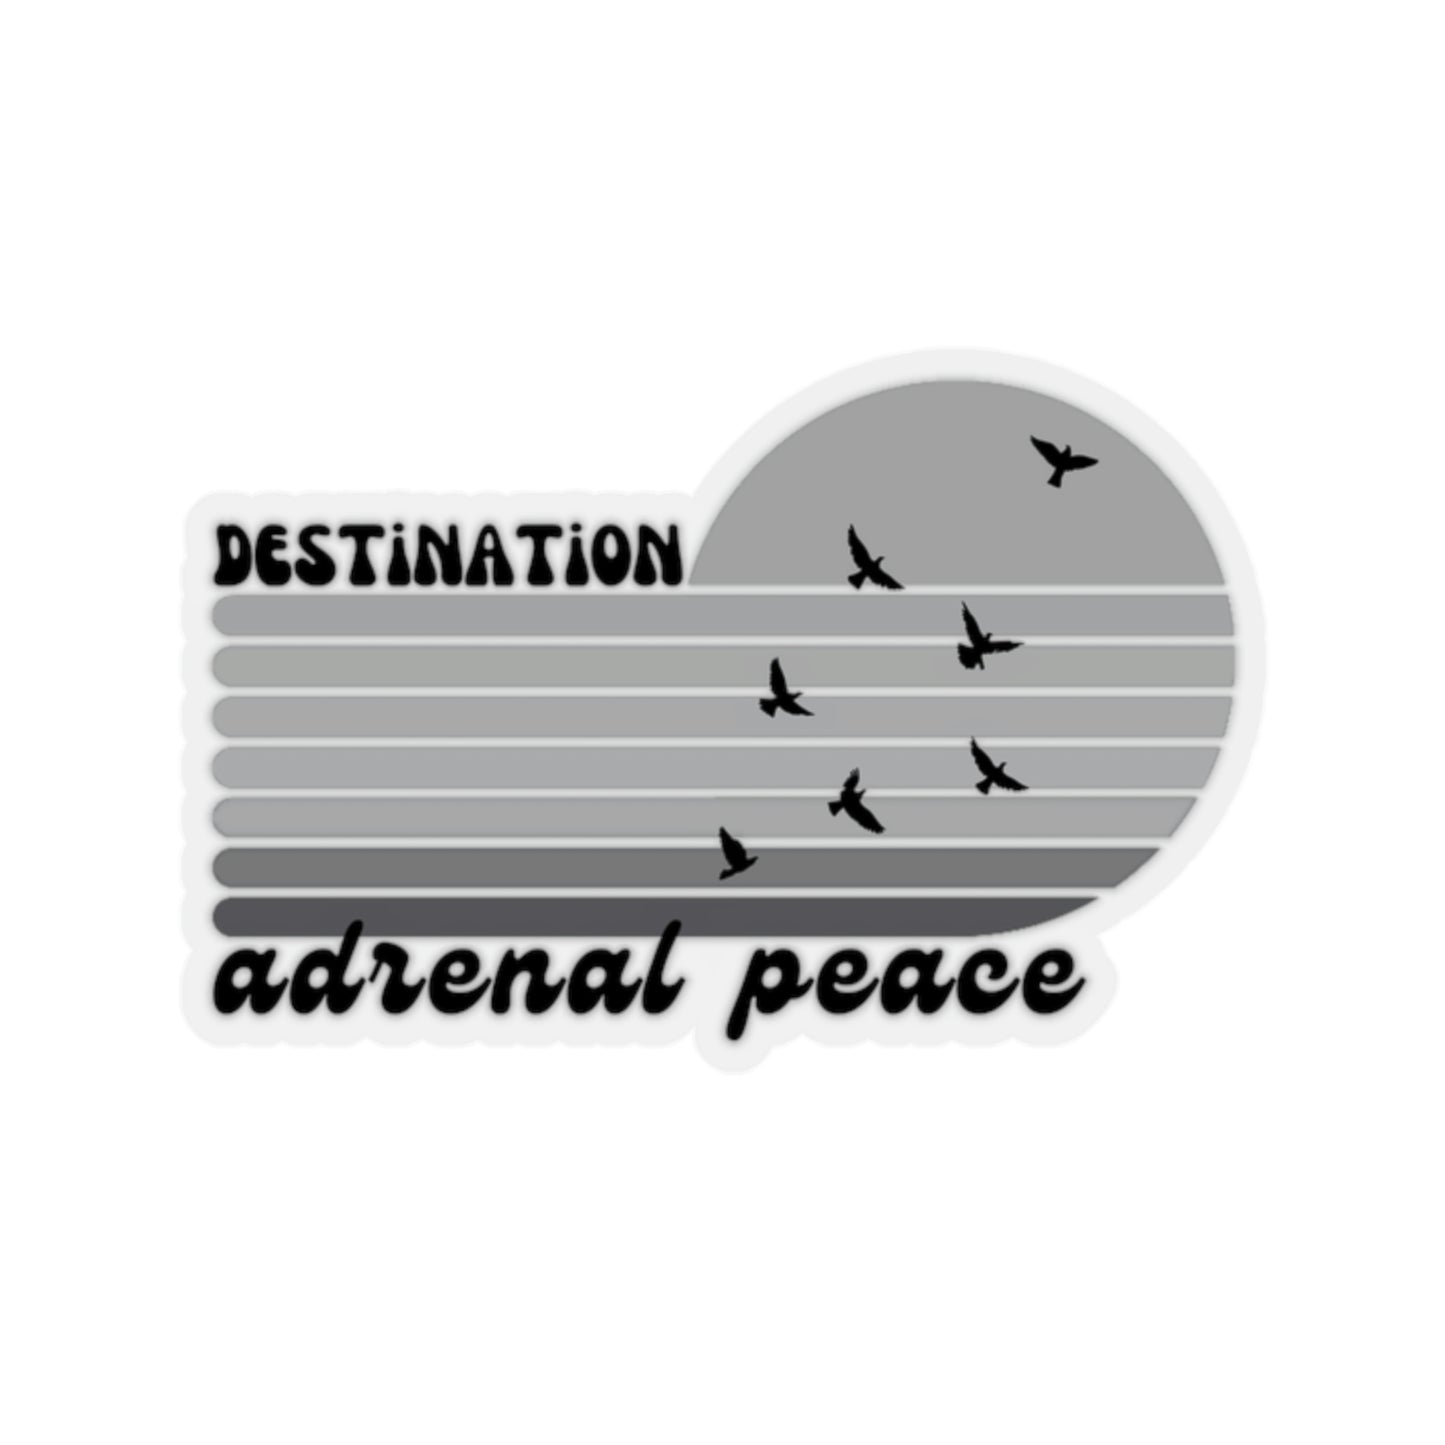 Destination: Adrenal Peace (grayscale) Kiss-Cut Stickers